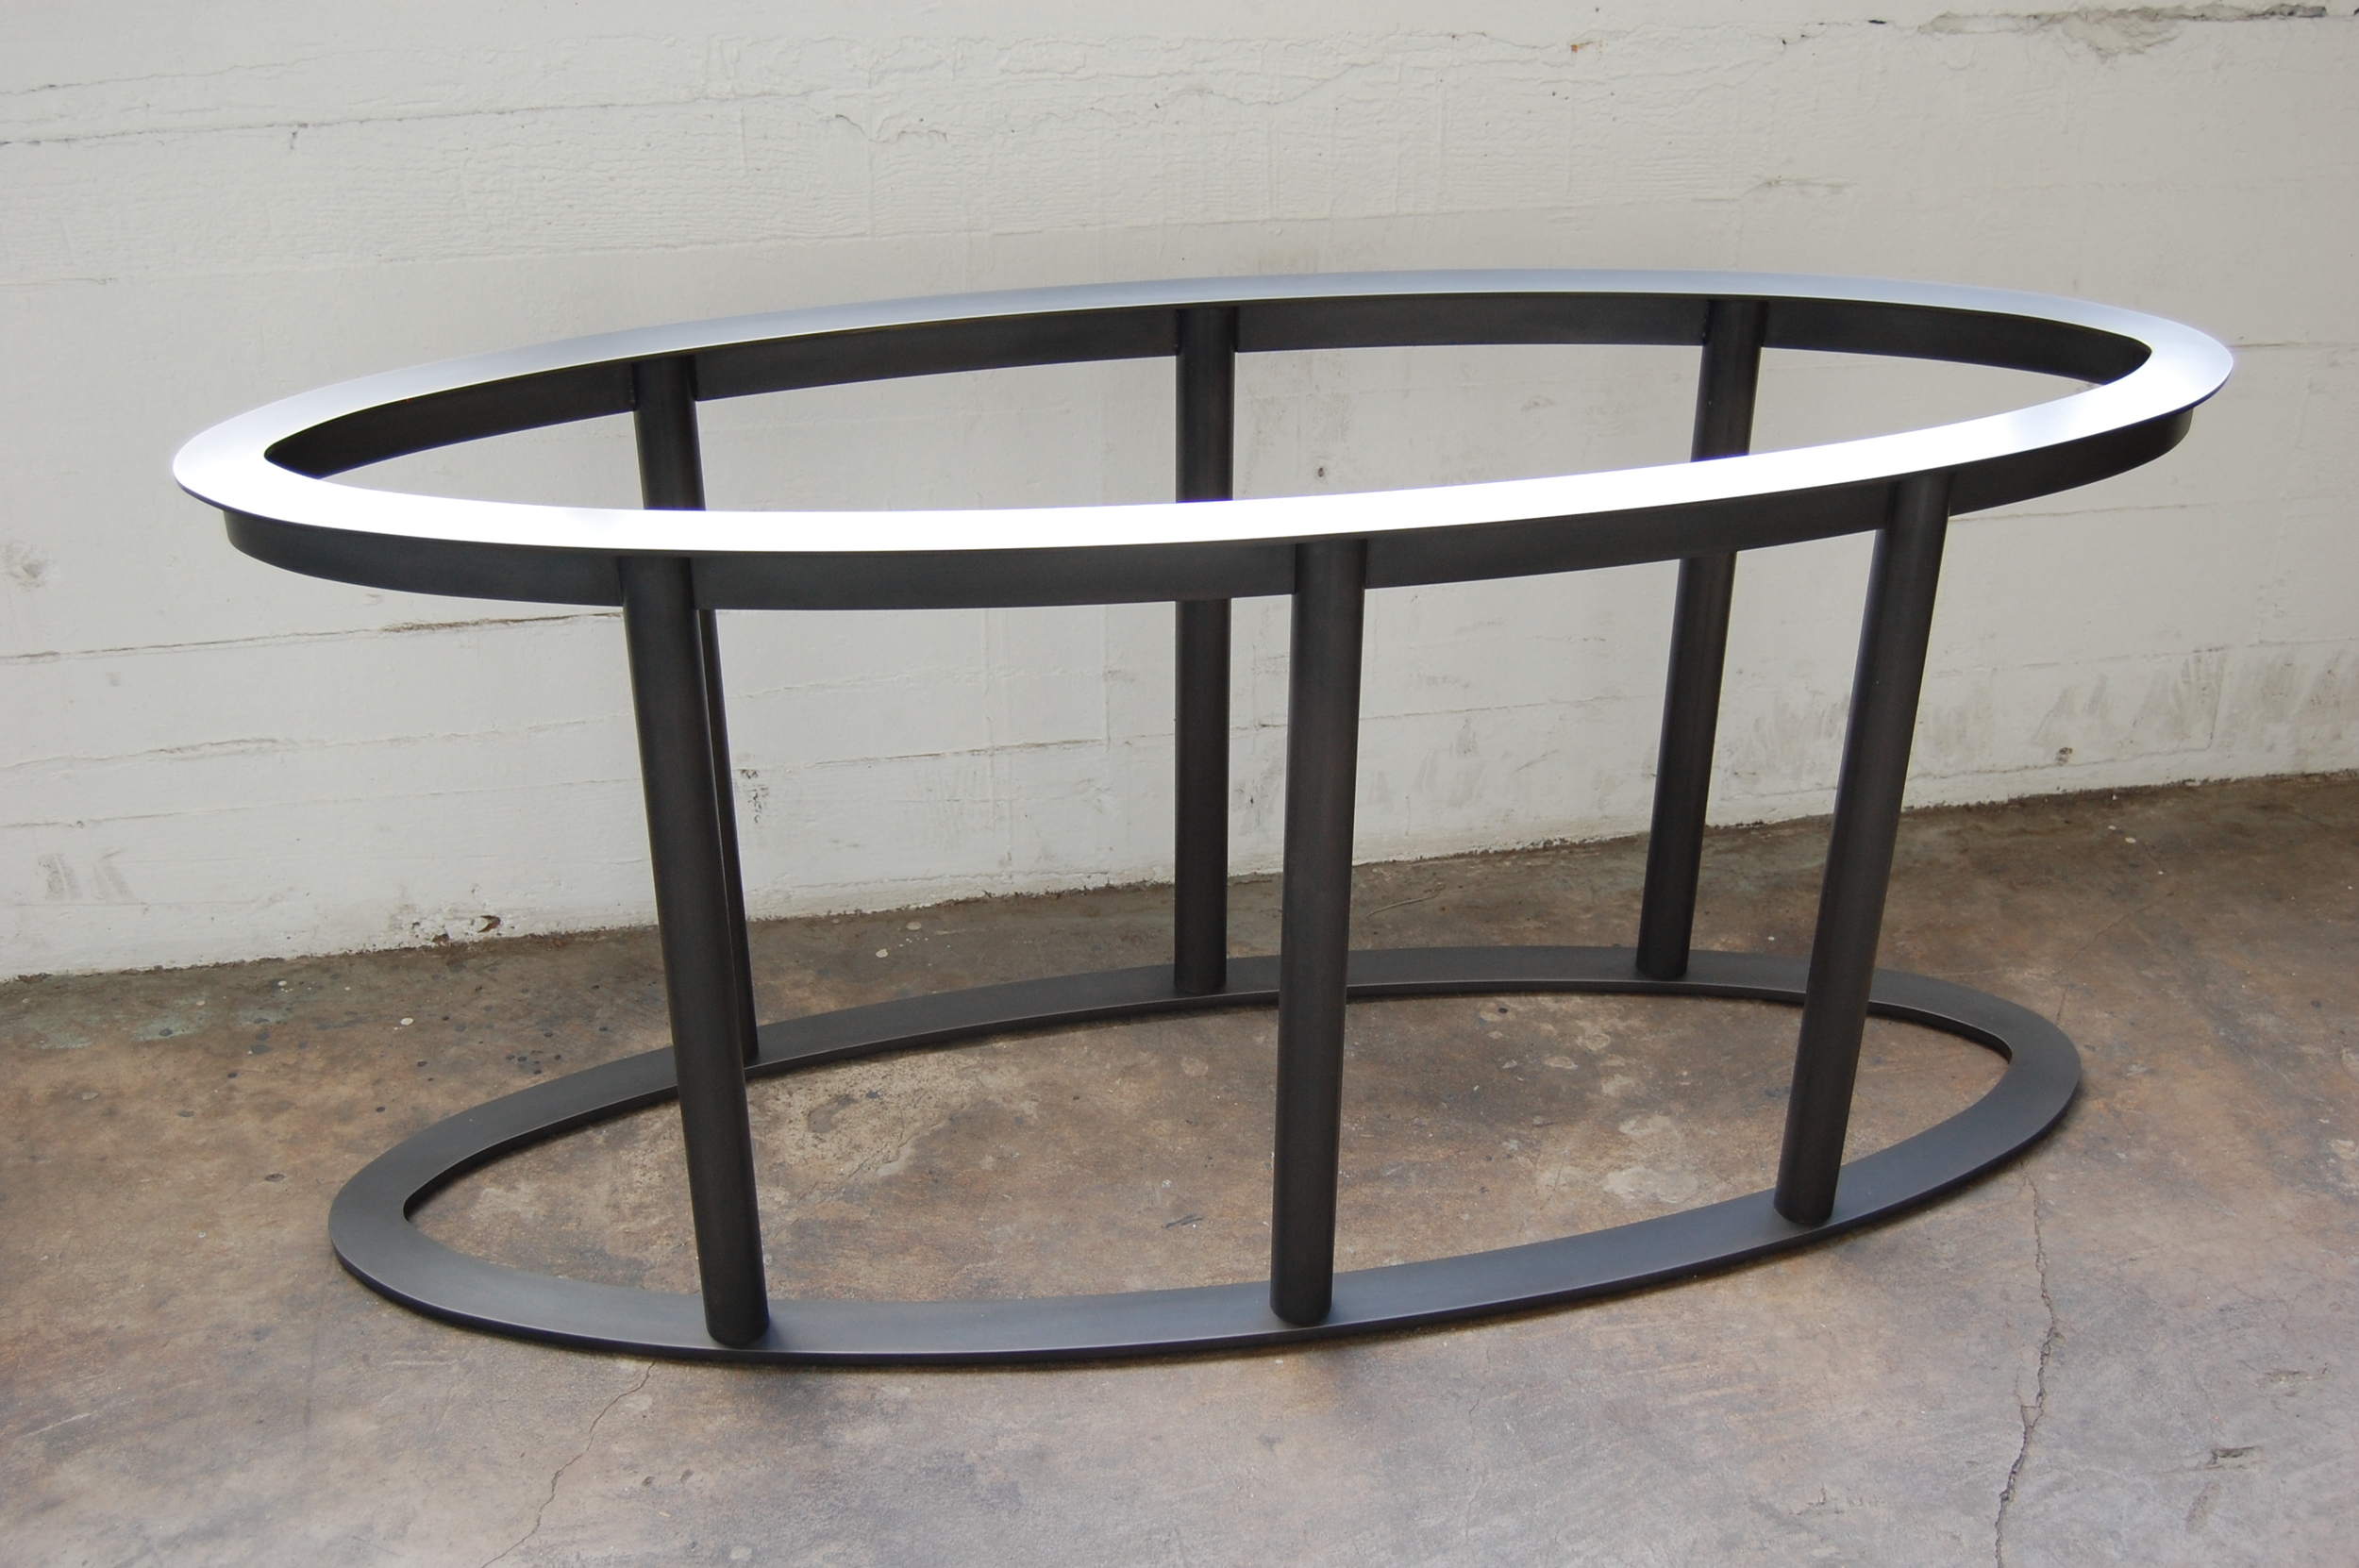  Blackened Steel Table Base.  Designed by Hensel Design Studios 